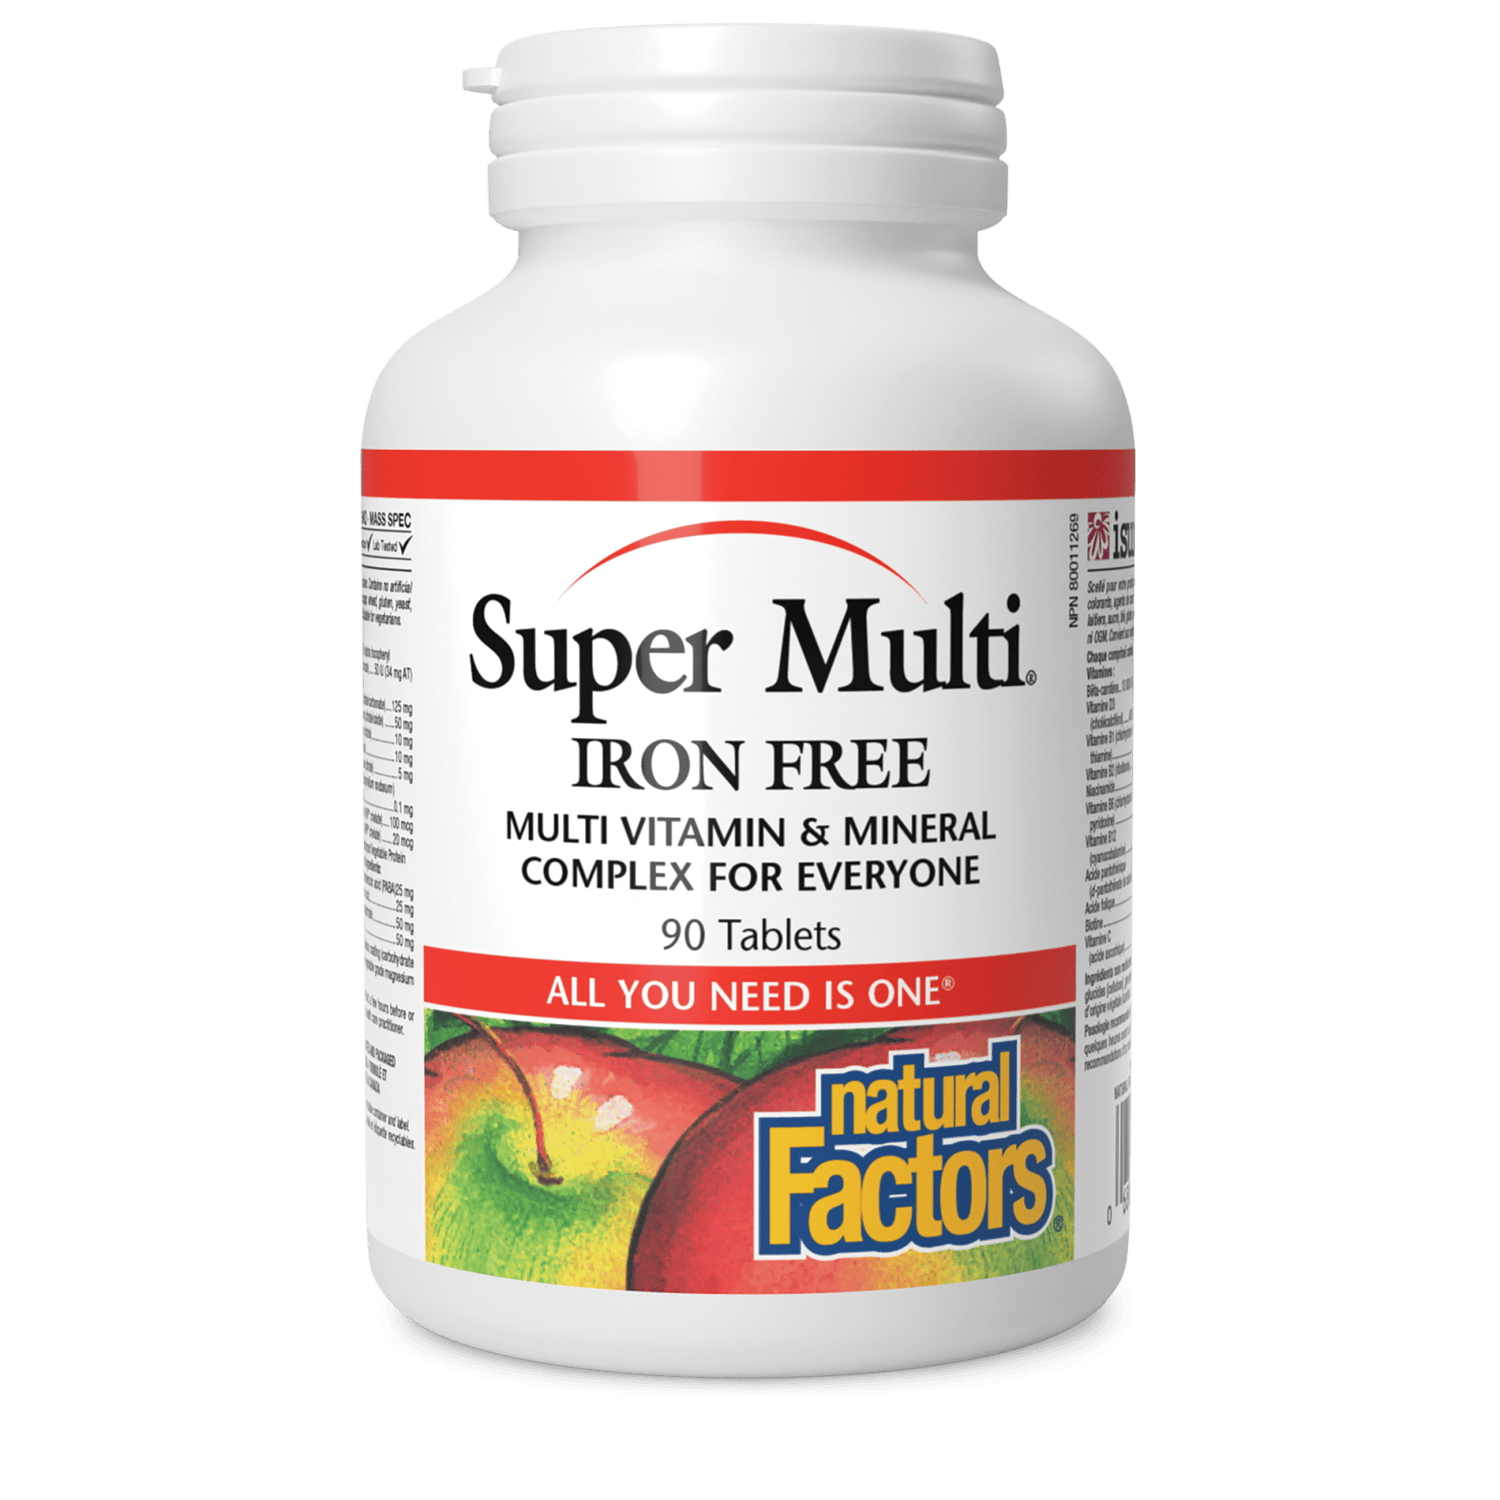 Super Multi Iron Free, Natural Factors|v|image|1508